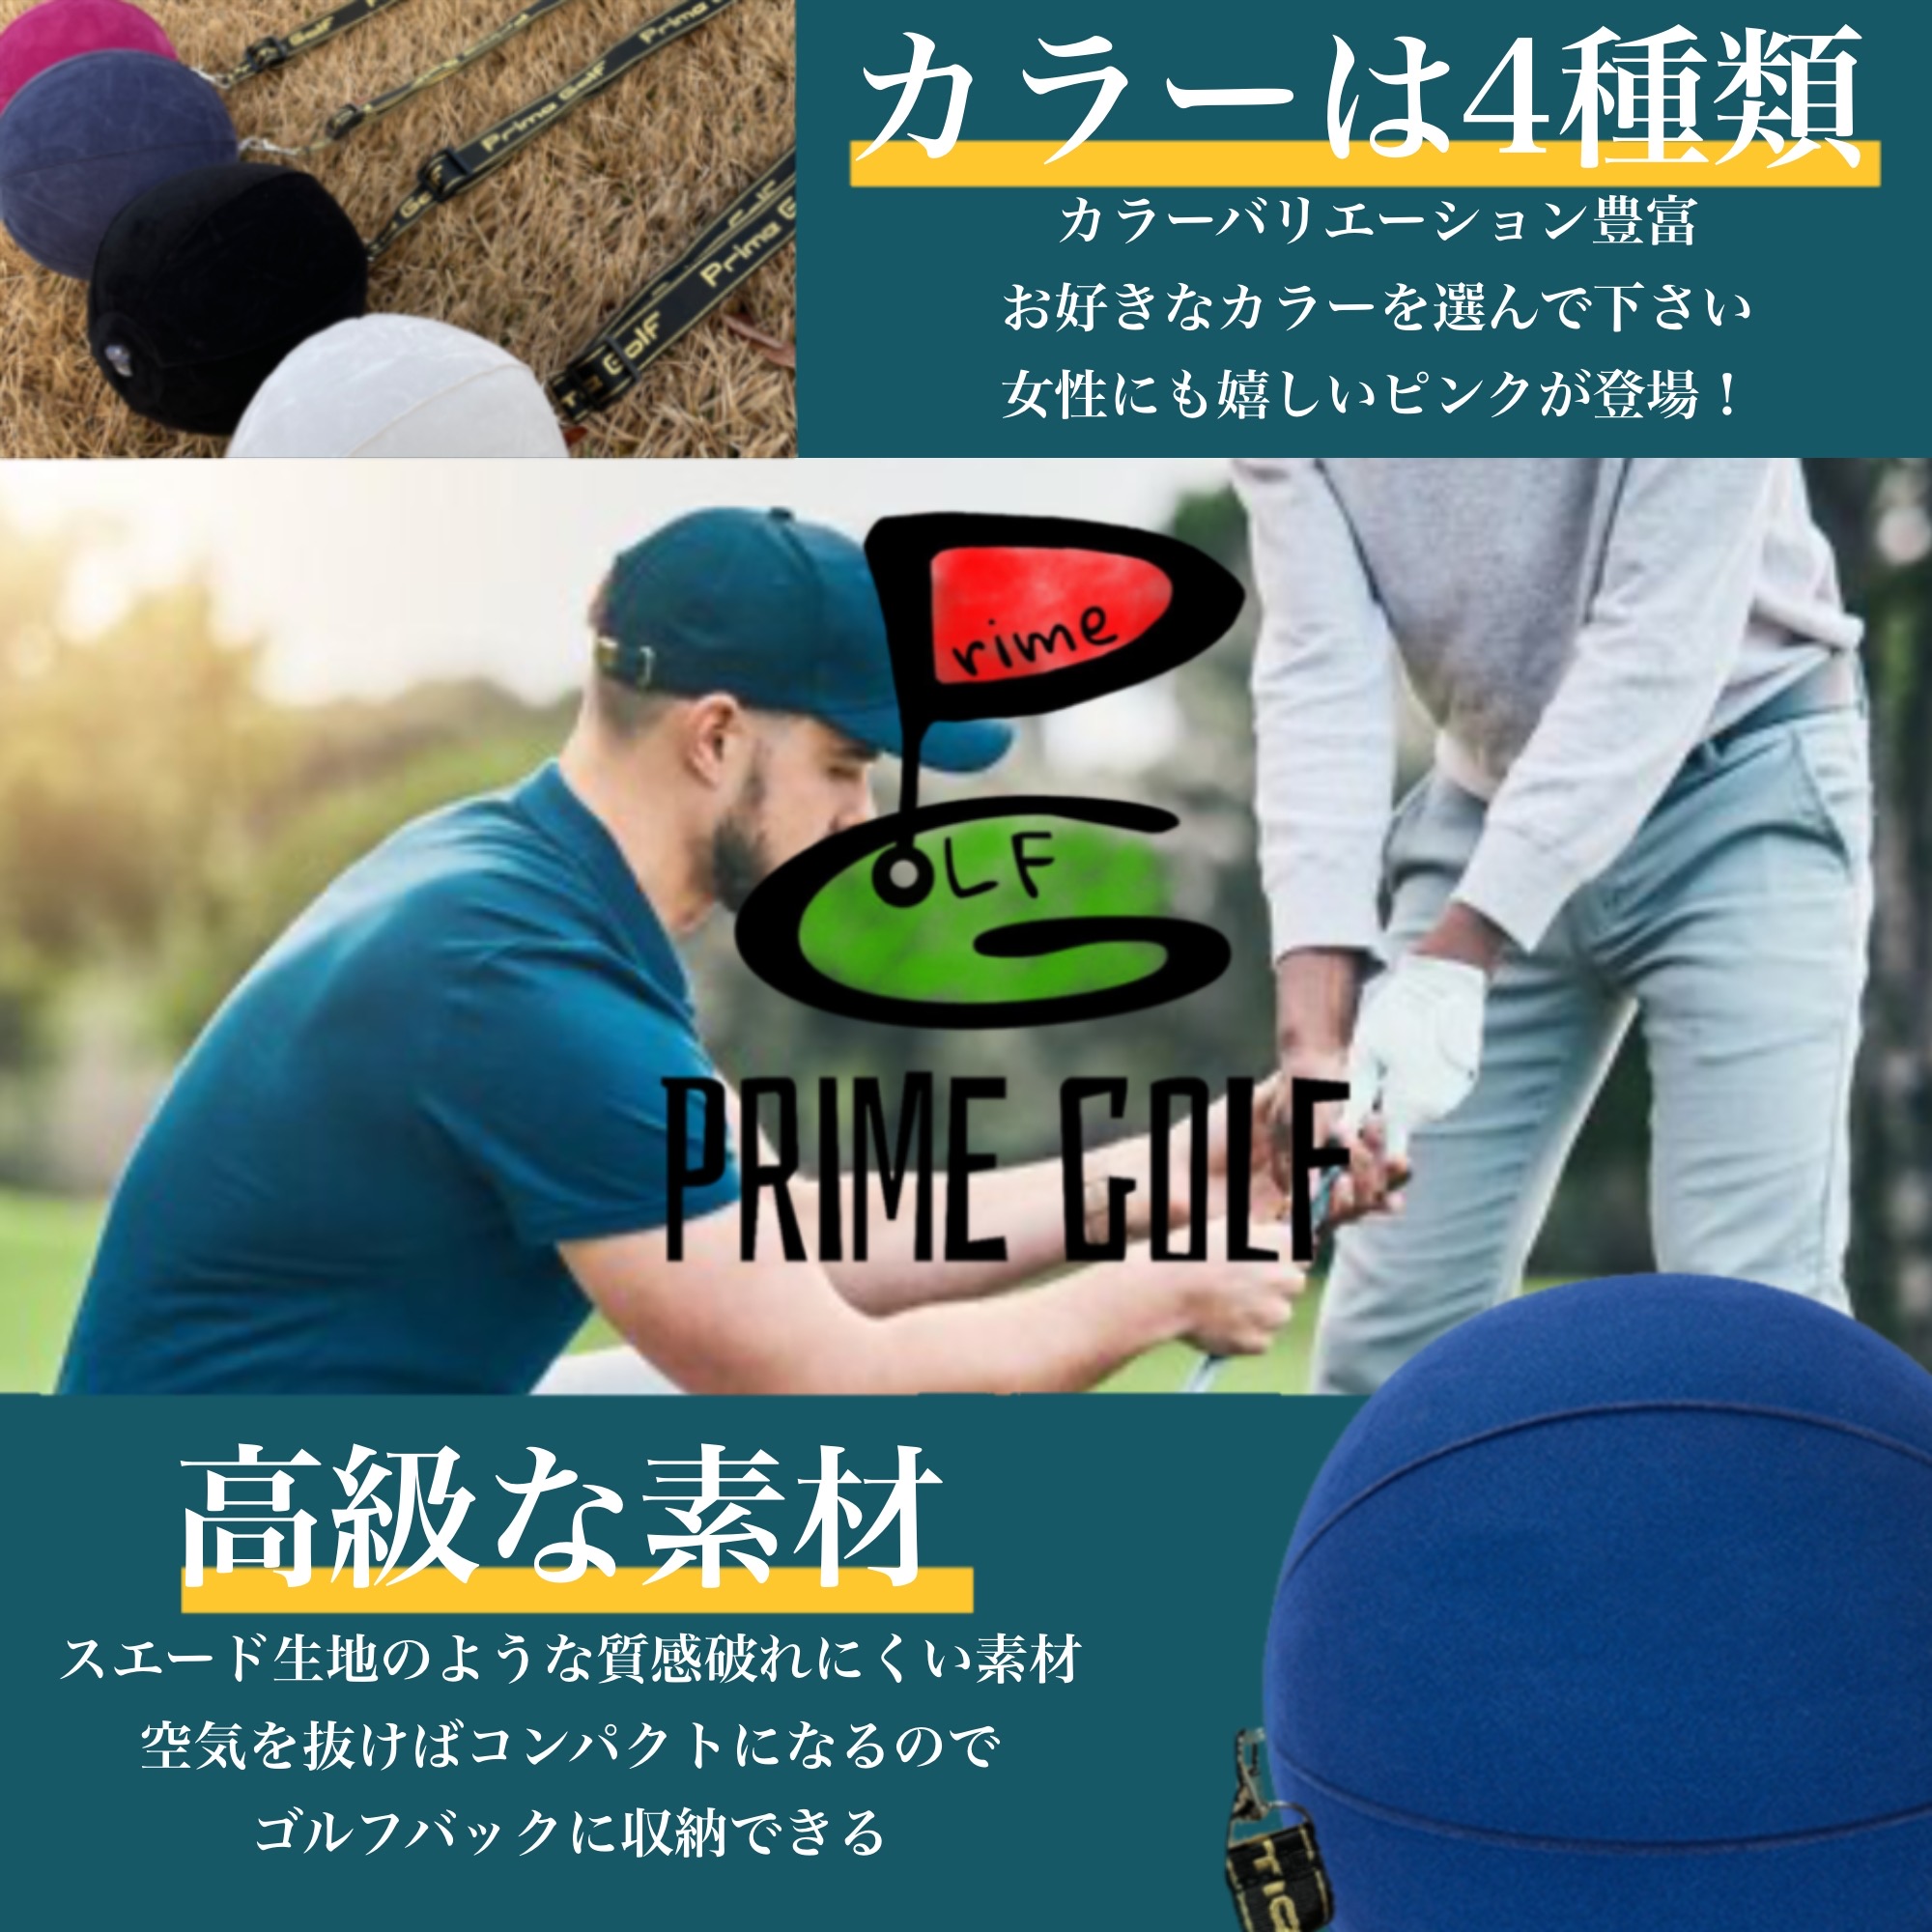 Prime Golf Golf practice instrument ball swing element .. interior wrist fixation arm triangle shape triangle wrist candy ball set 